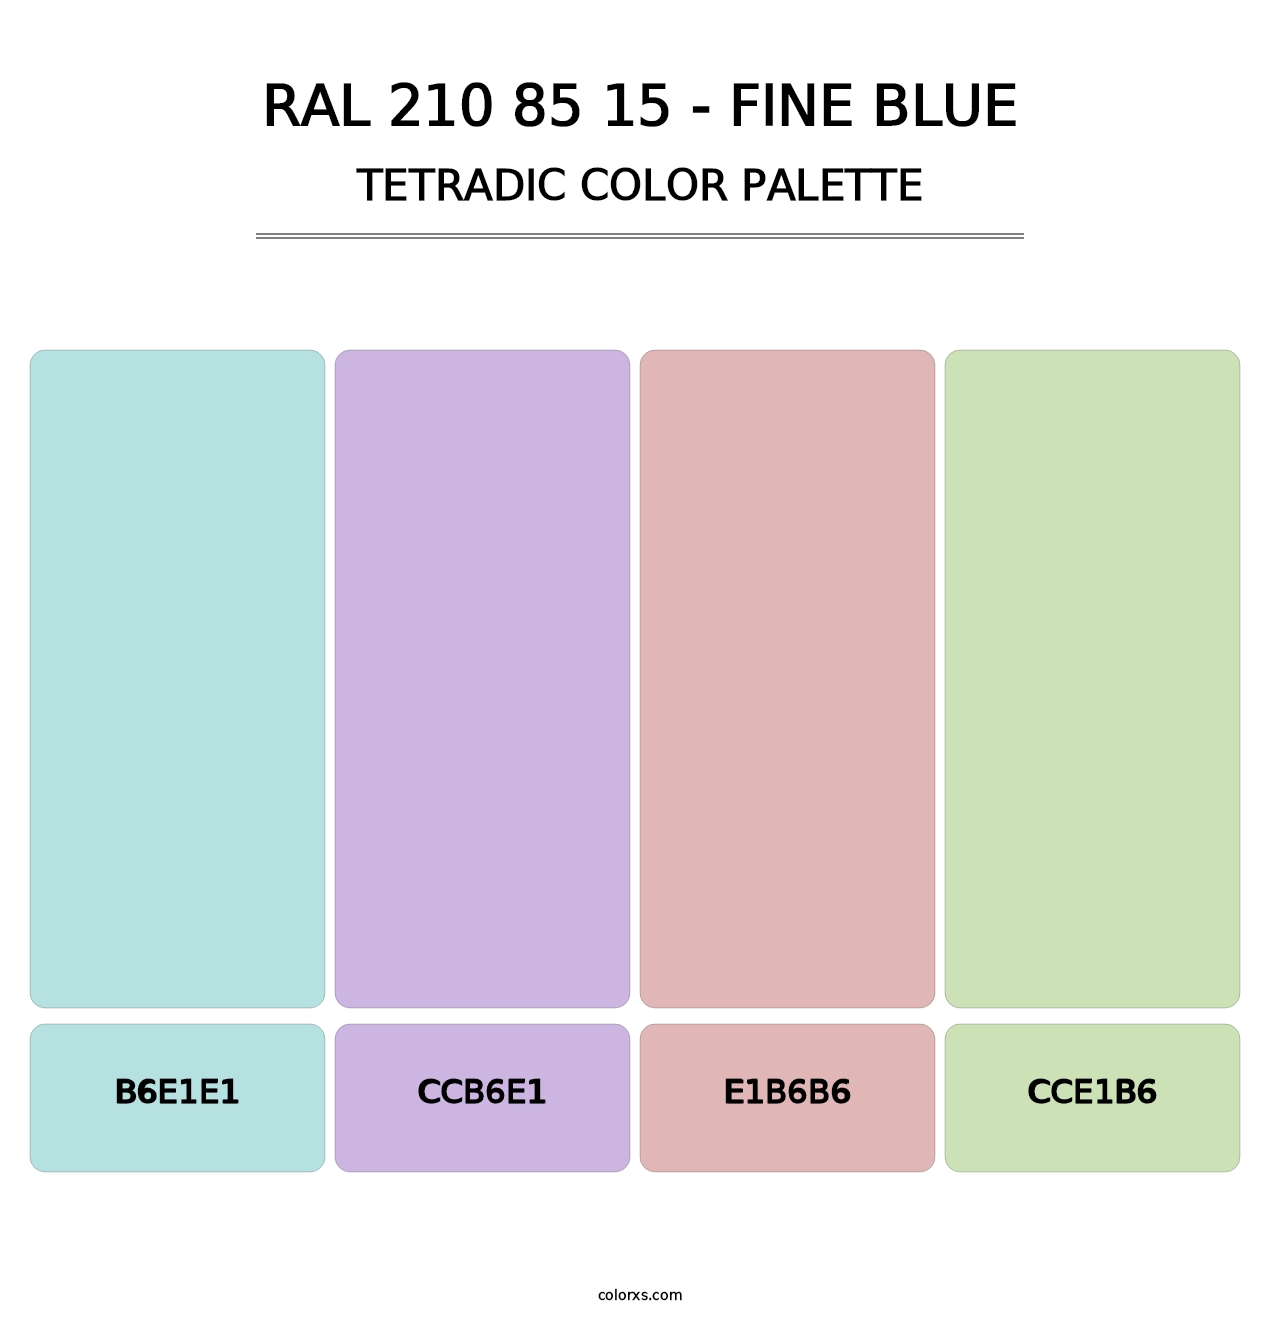 RAL 210 85 15 - Fine Blue - Tetradic Color Palette